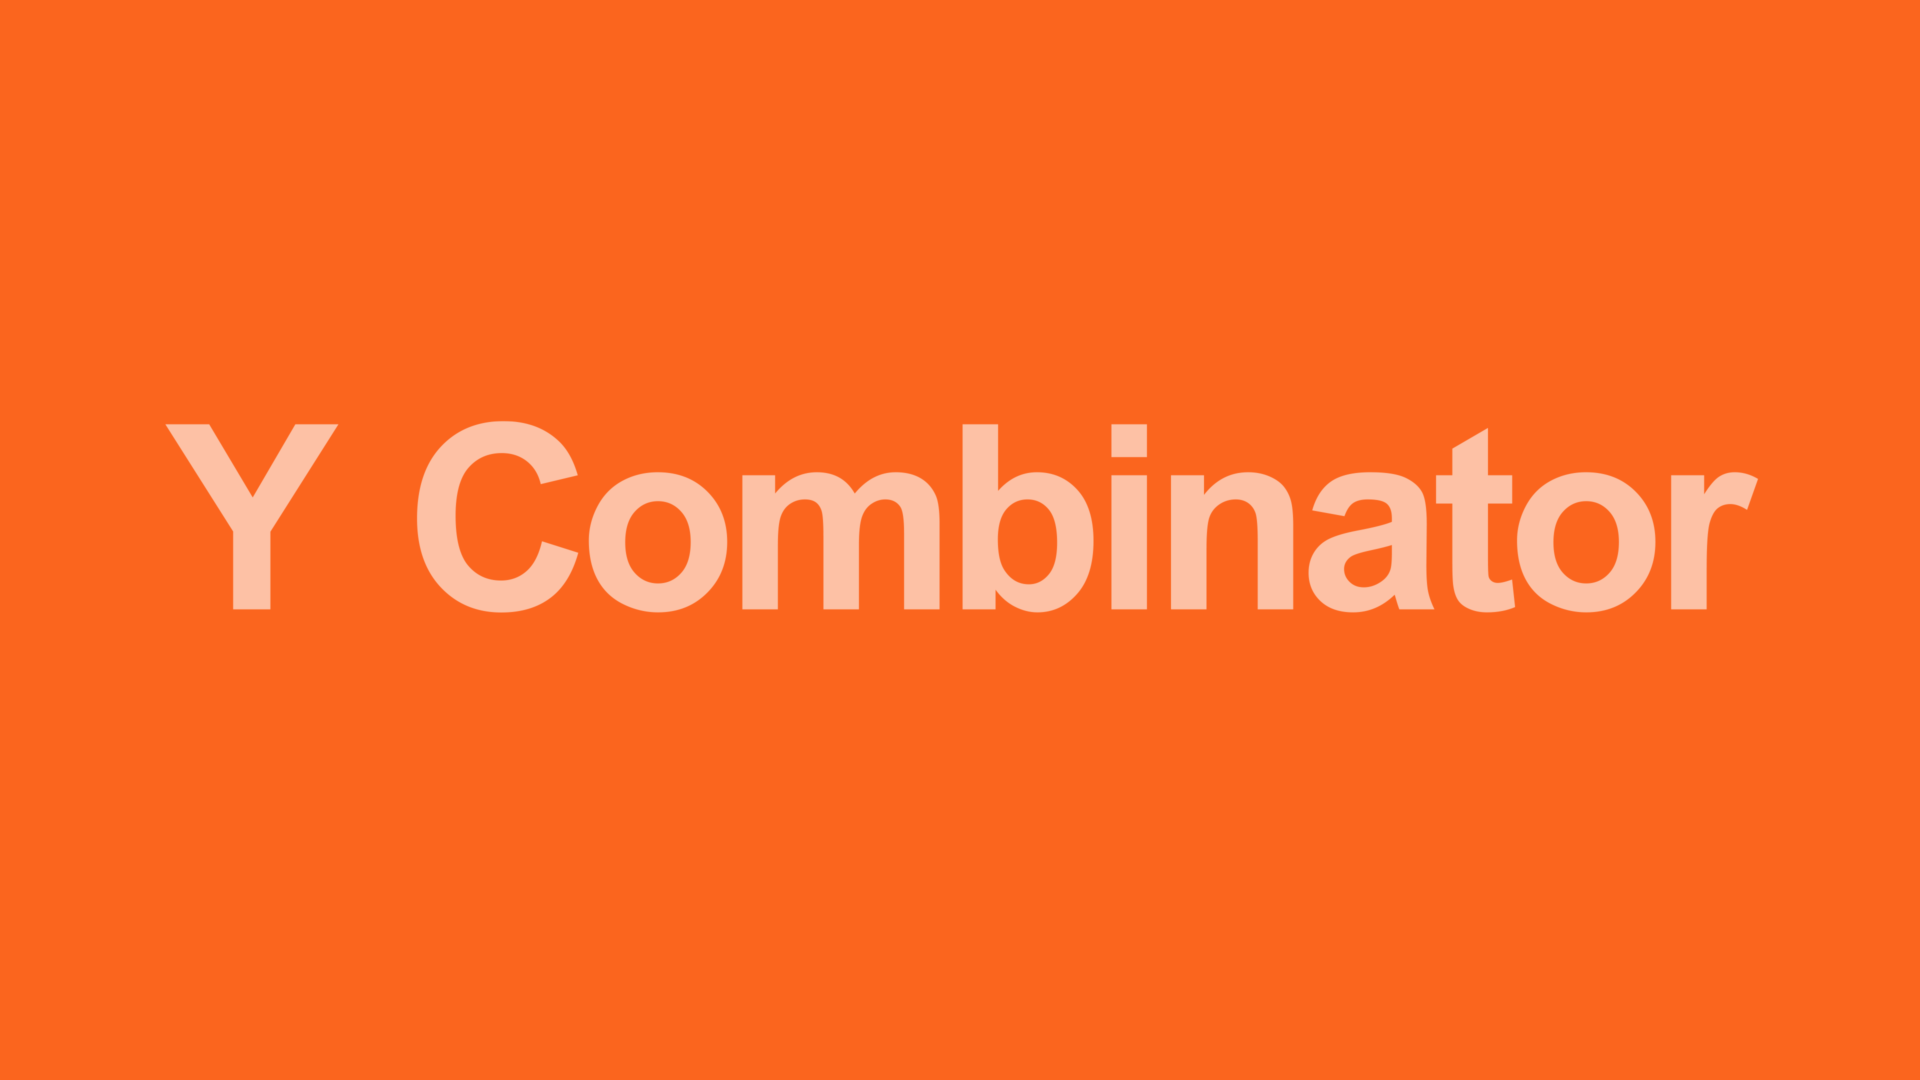 Y Combinator: what startup should I start?